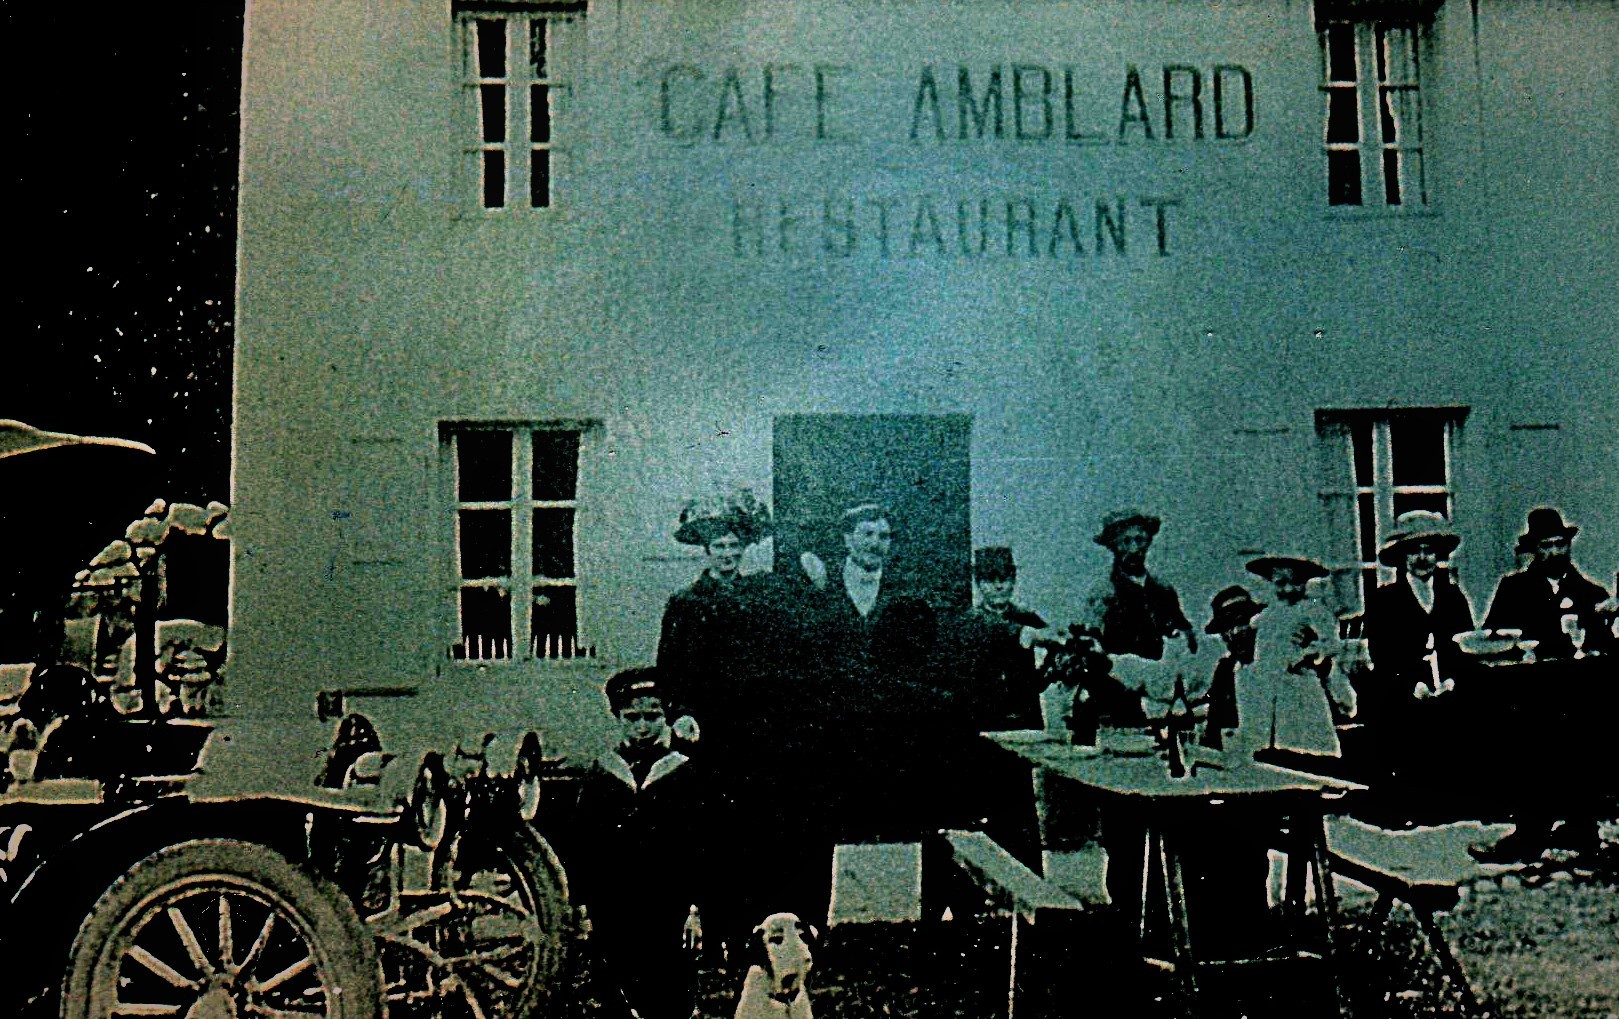 Cafe amblard 1891